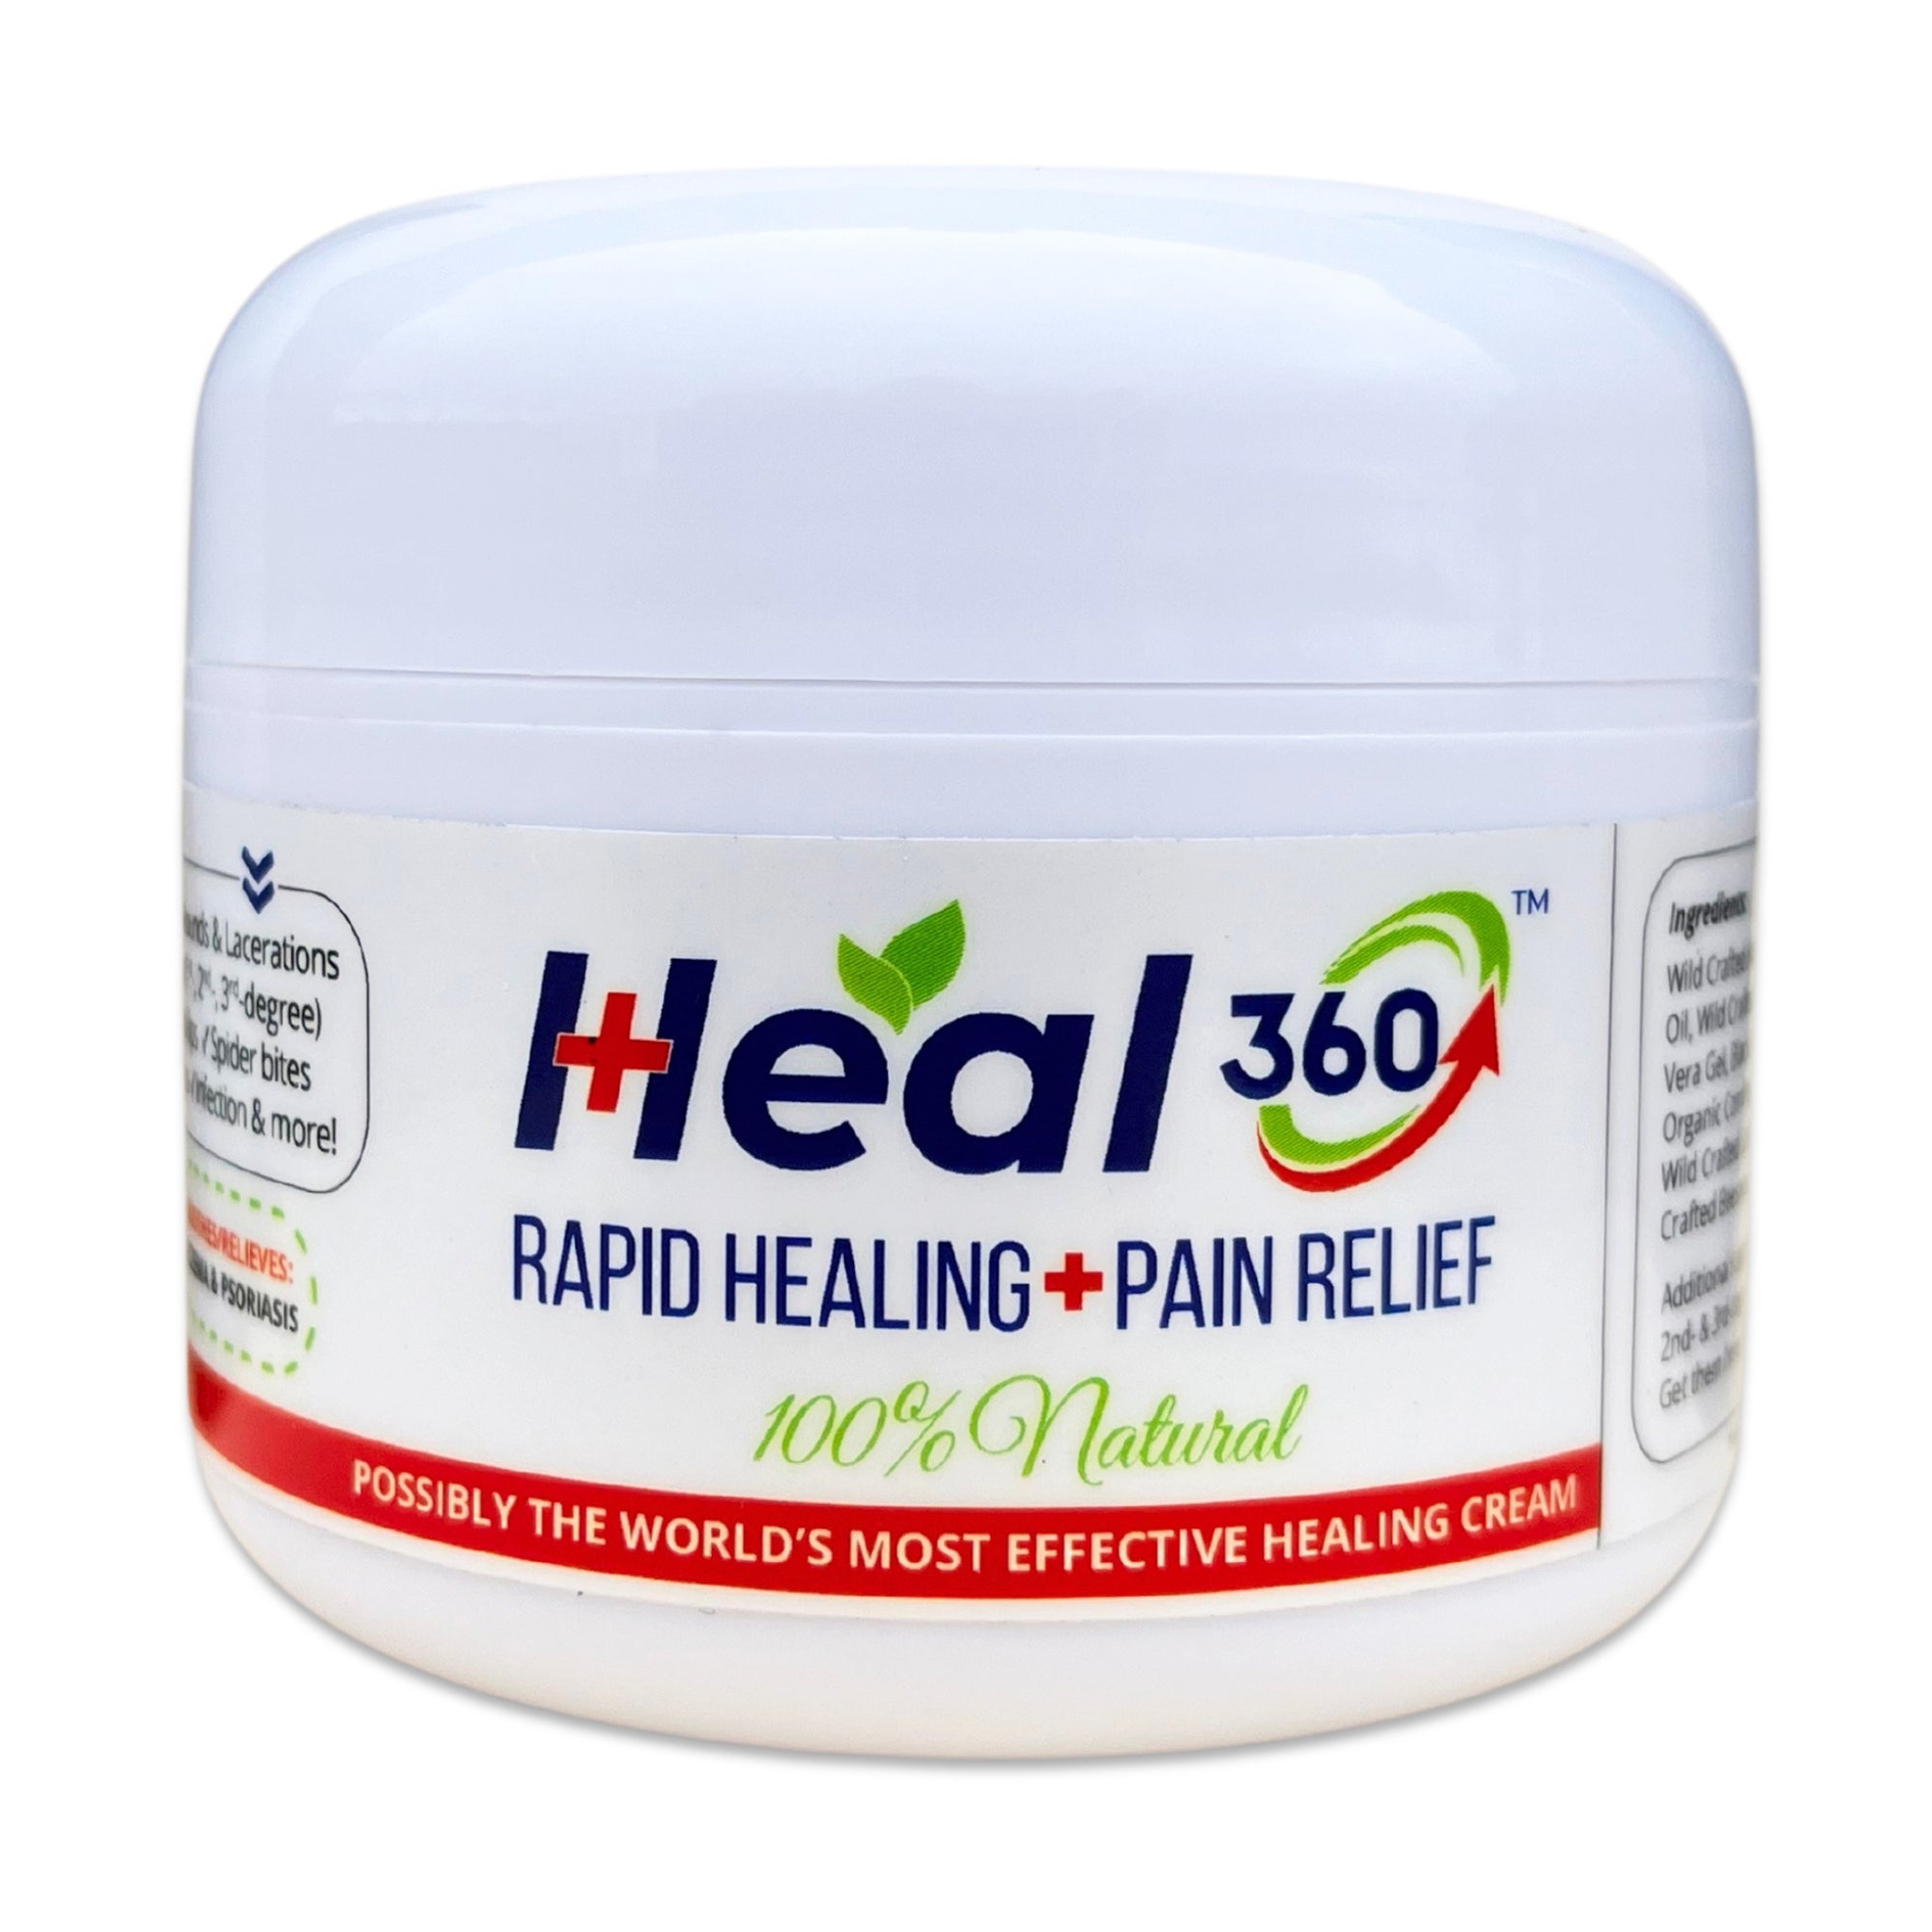 Heal360 Natural Healing Cream